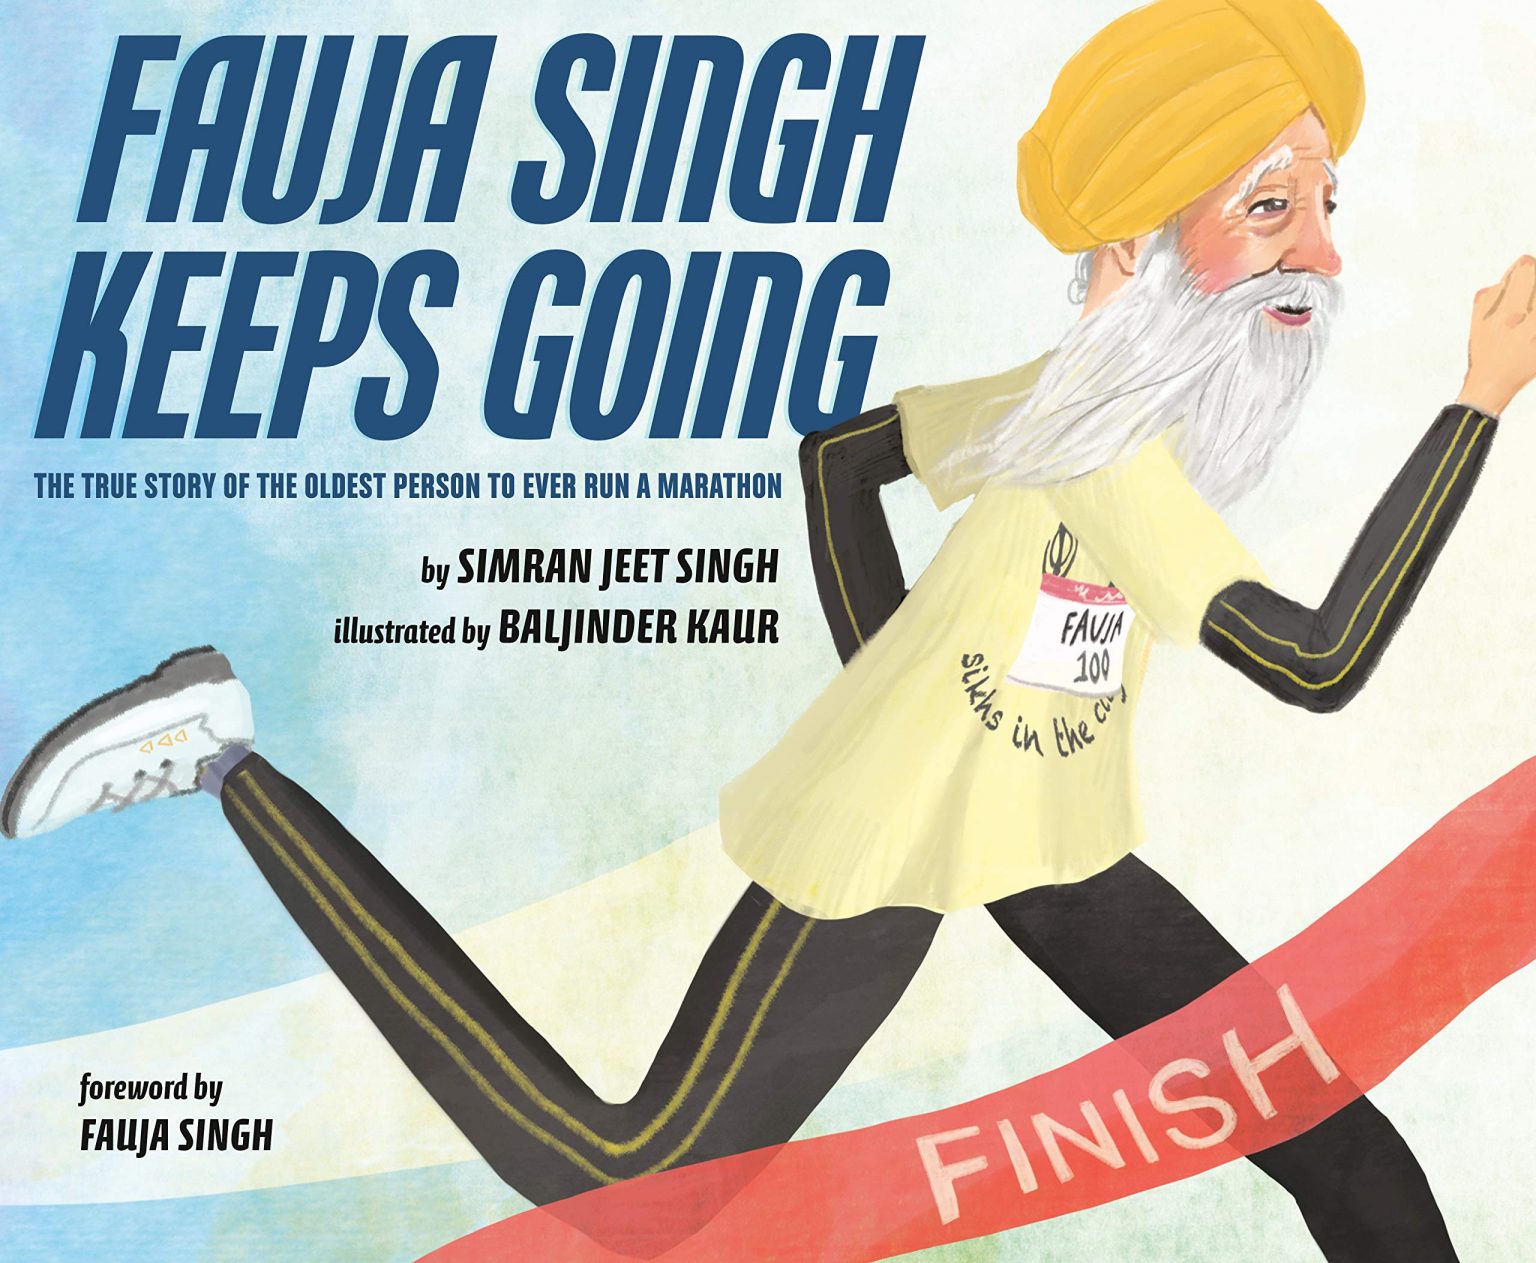 Fauja Singh Keeps Going by Simrat Jeet Singh